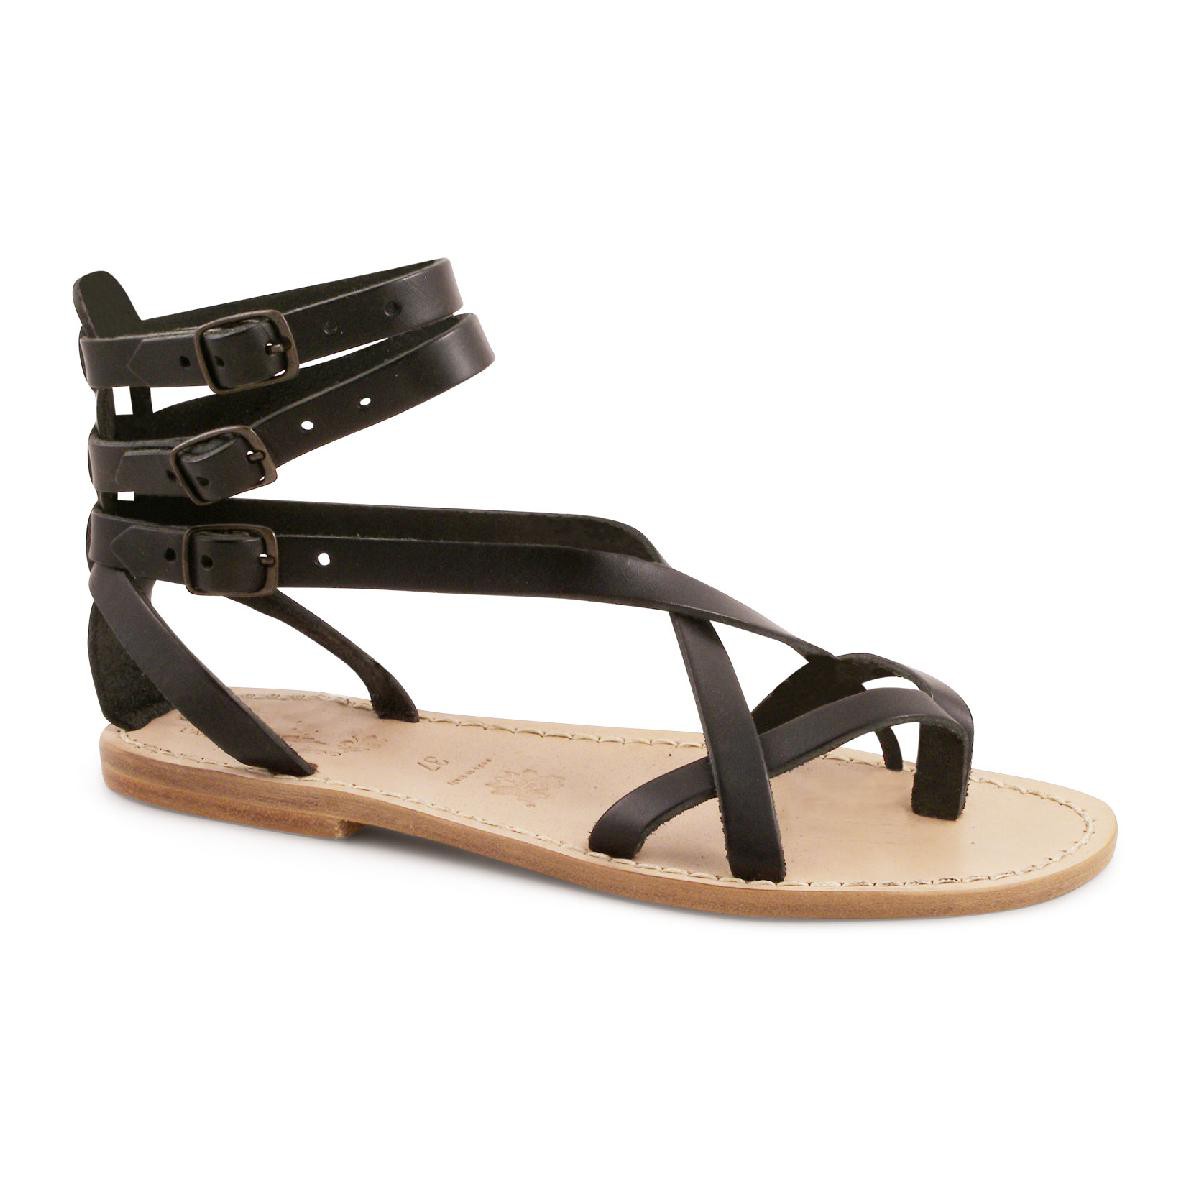 Gladiator sandals for women in black leather handmade | Gianluca - The ...